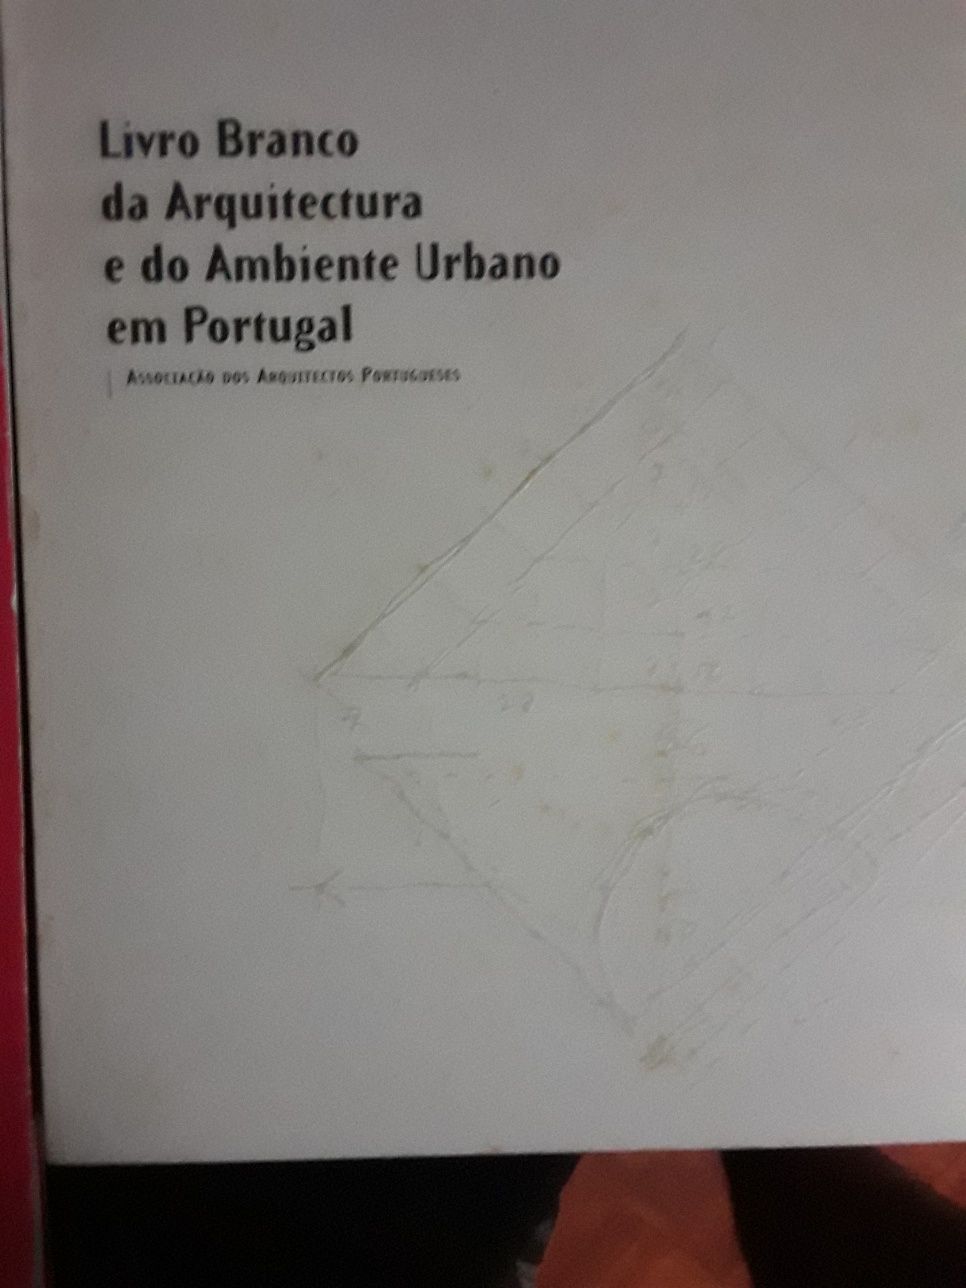 Espaco Publico e a Interdisciplinaridade/Livro Branco da Arquitectura